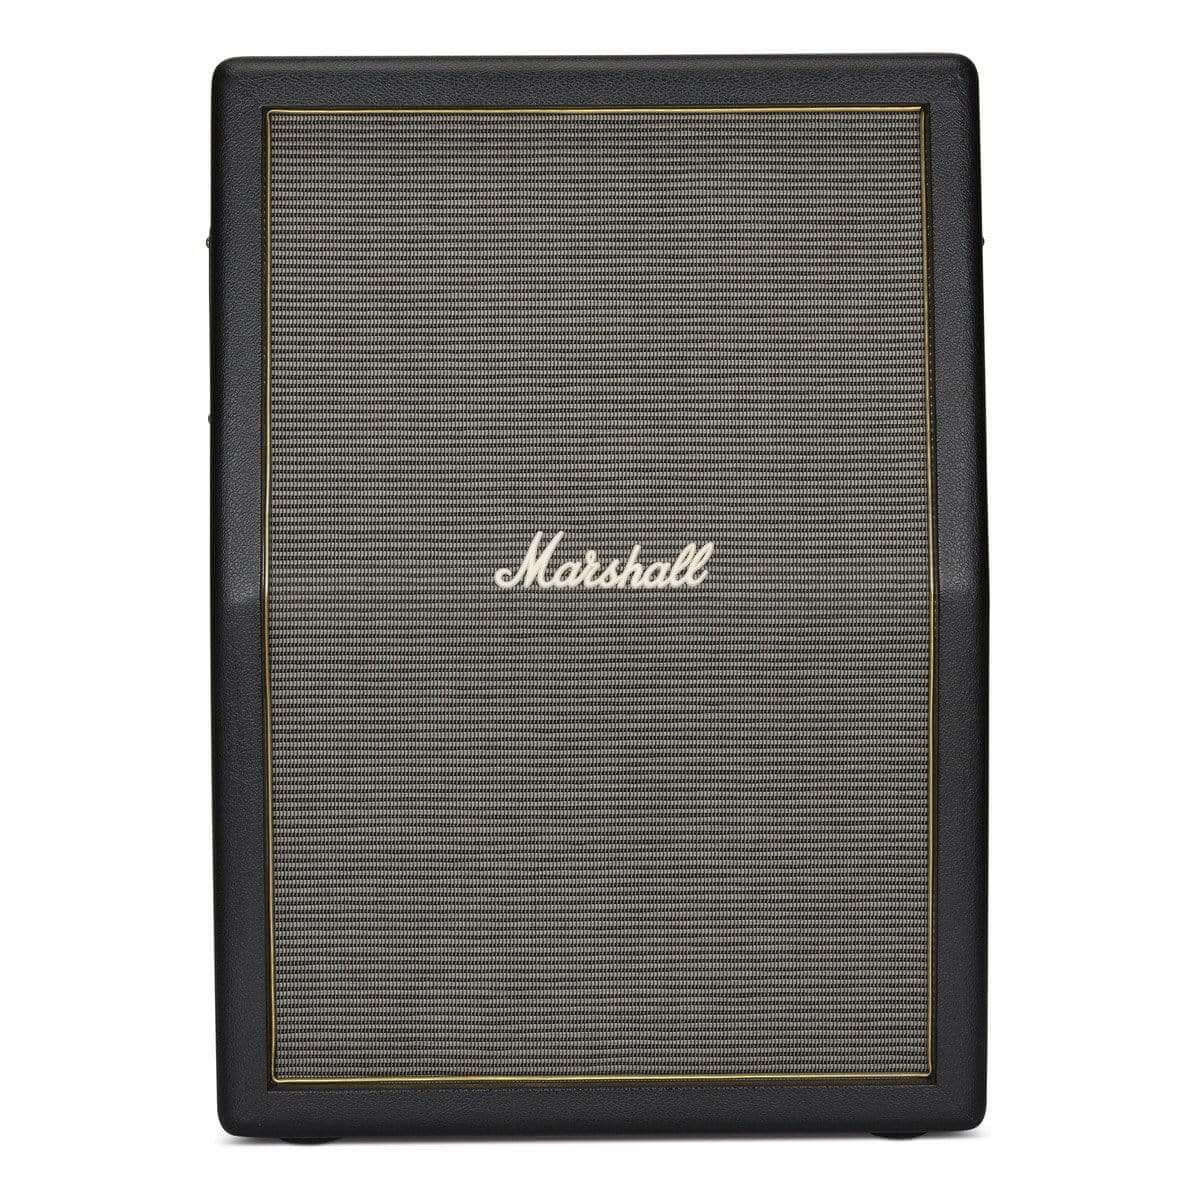 Marshall Amplifier Marshall ORI212A